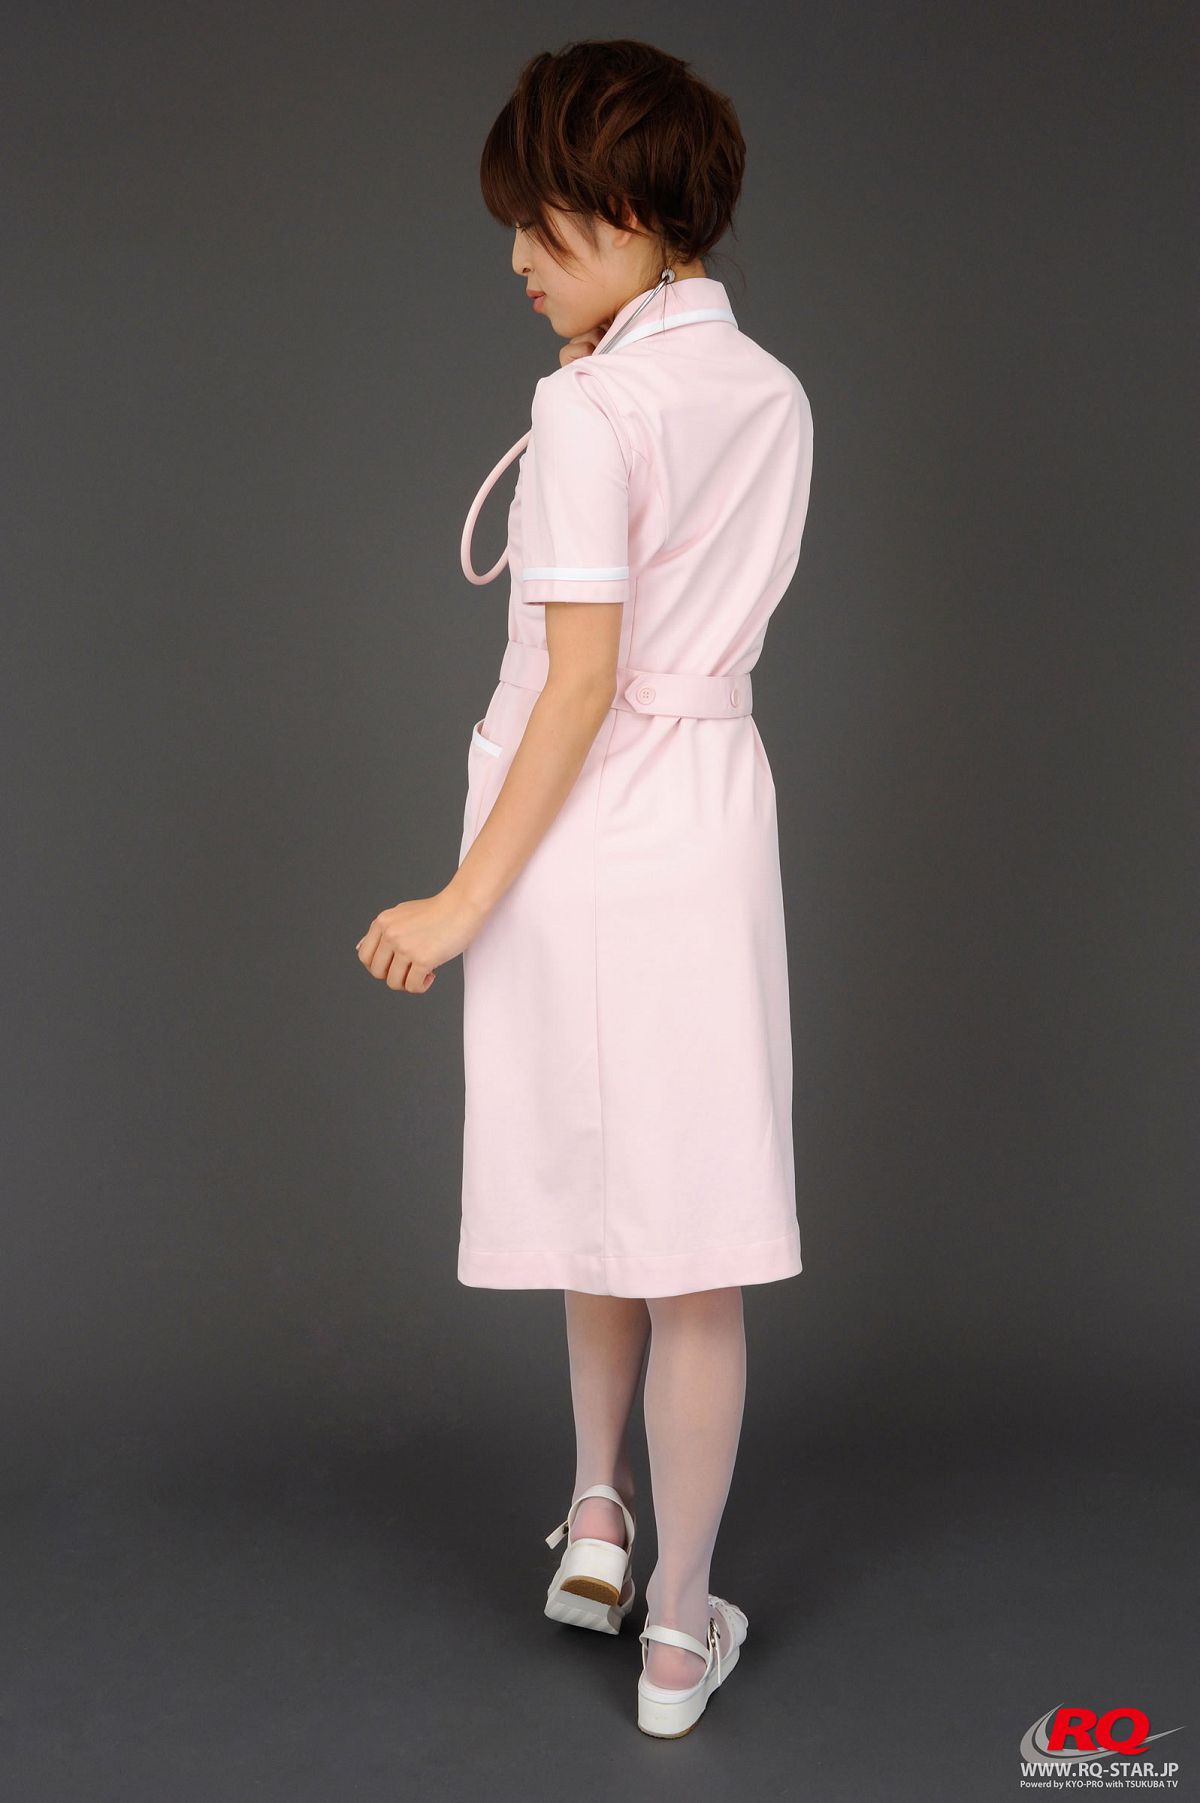 [RQ-Star] No.0019 Umi Kurihara 栗原海 ピンクナース 护士装  Nurse Costume [73P]